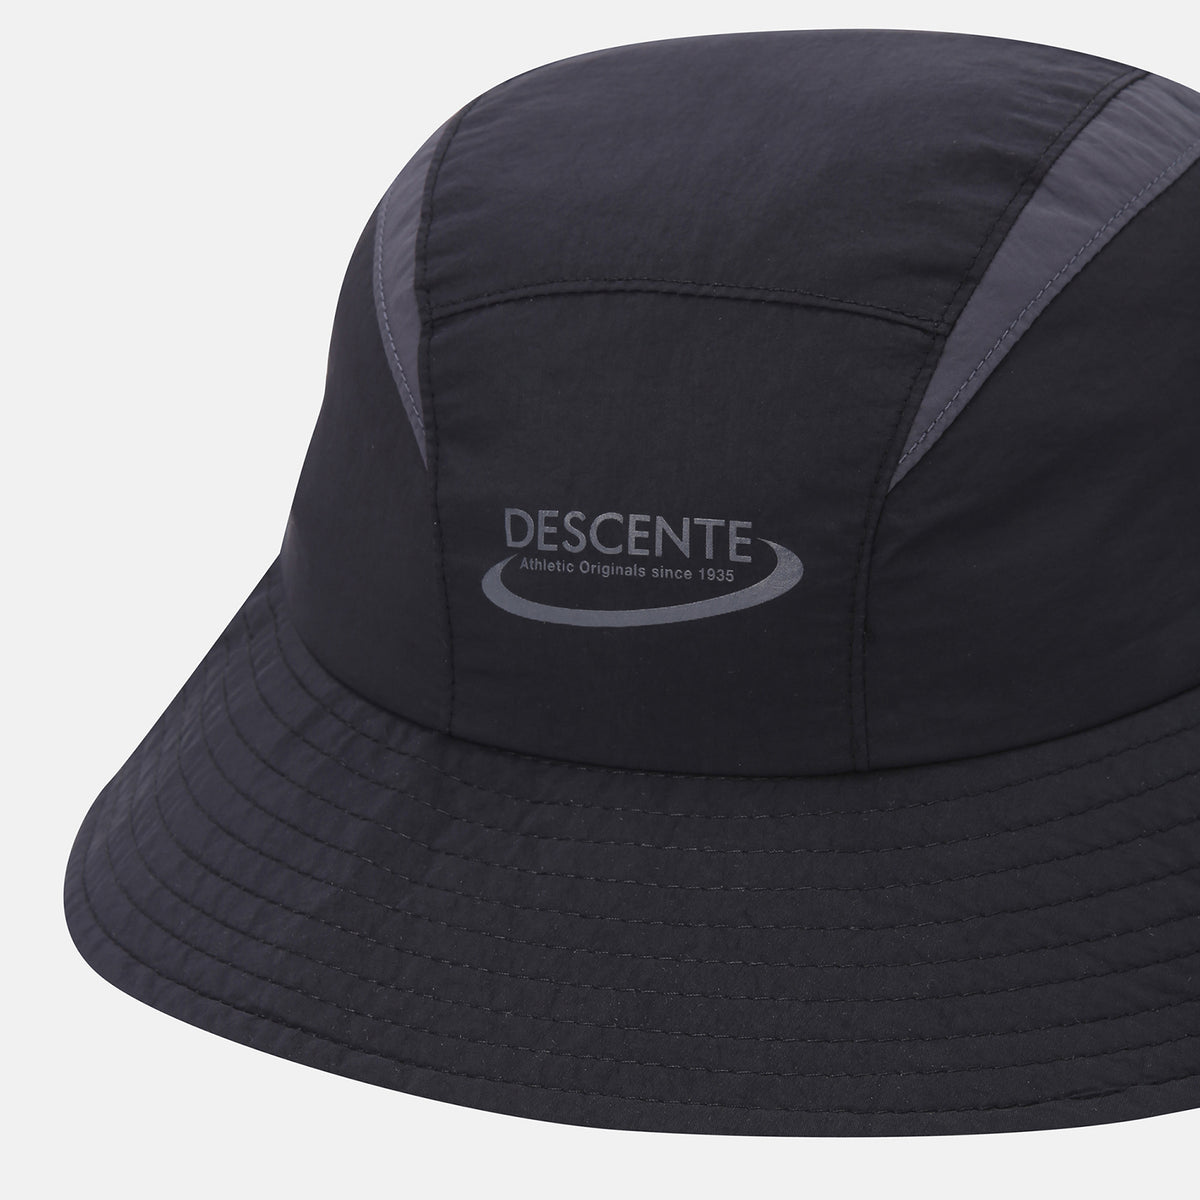 SPORTSBASIC POCKET DOME BUCKET HAT 中性 運動帽